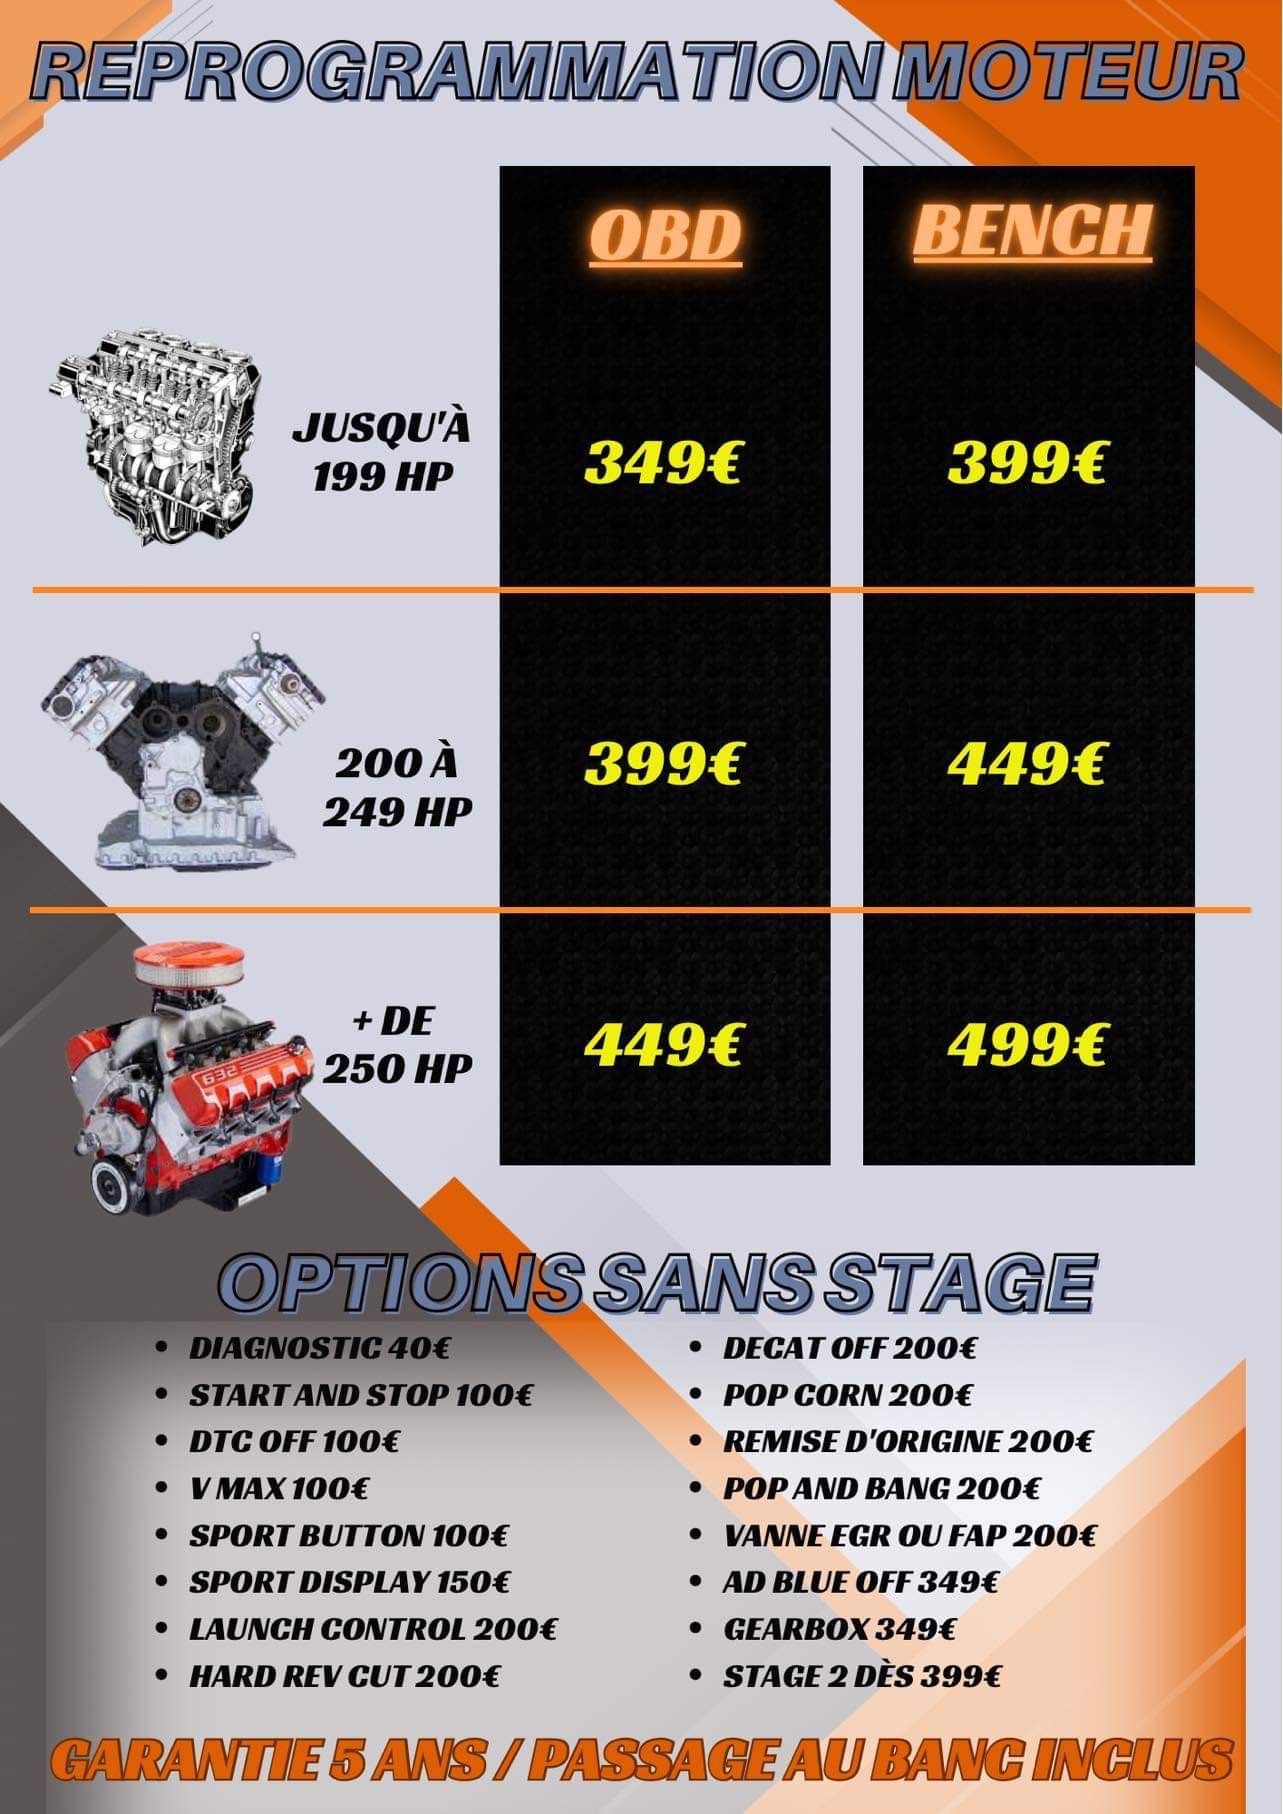 Reprogrammation moteur - 1MAX2FUN Motorsport France